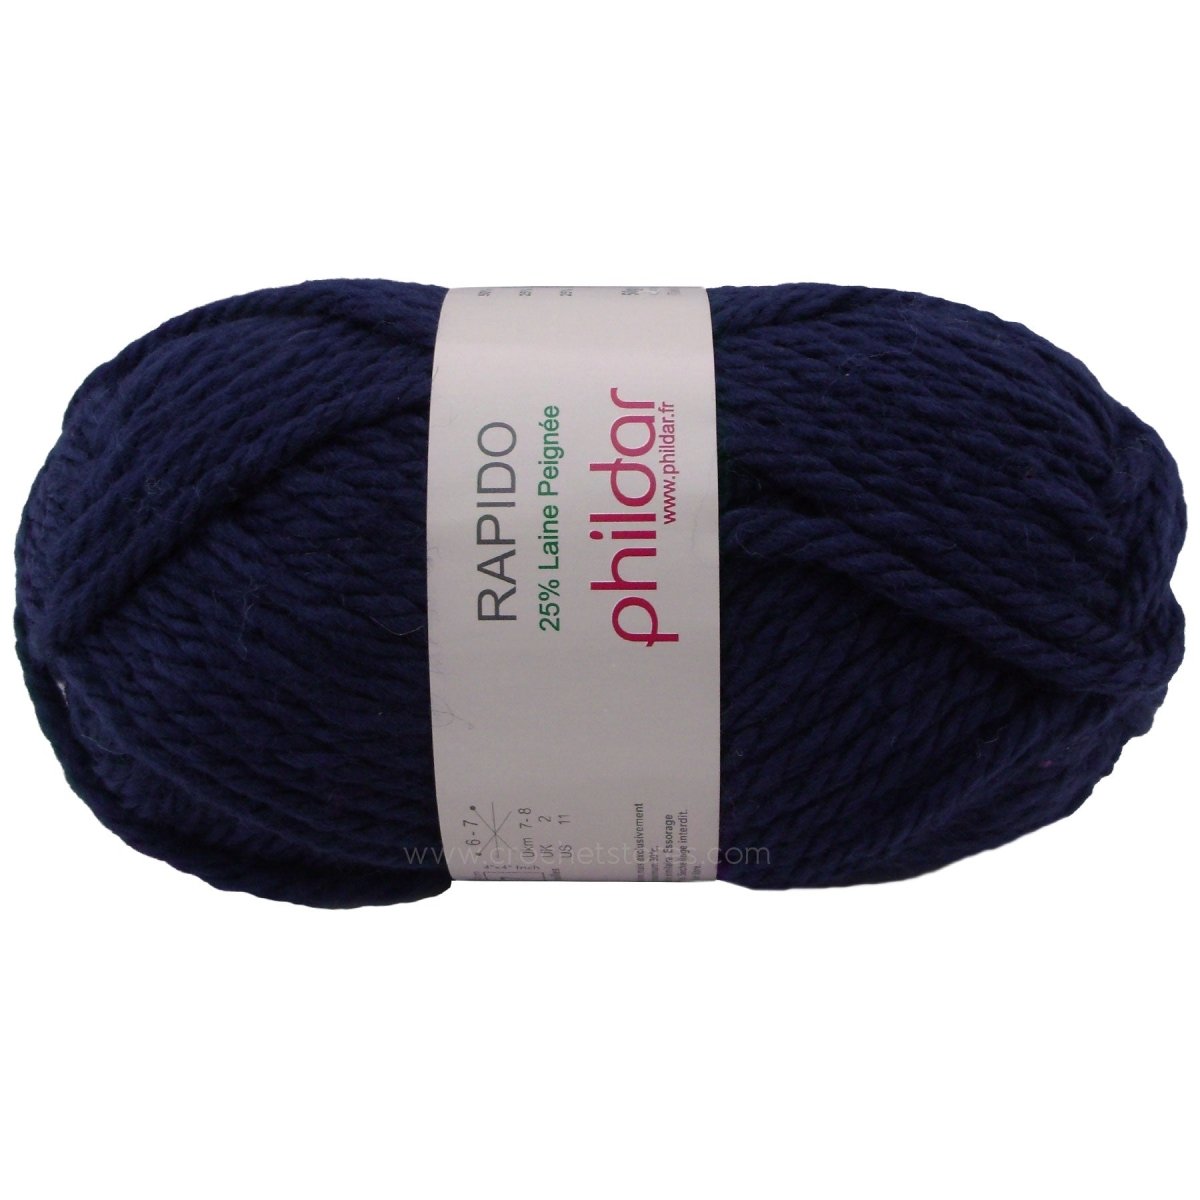 RAPIDO - Crochetstores500981-023307673323069